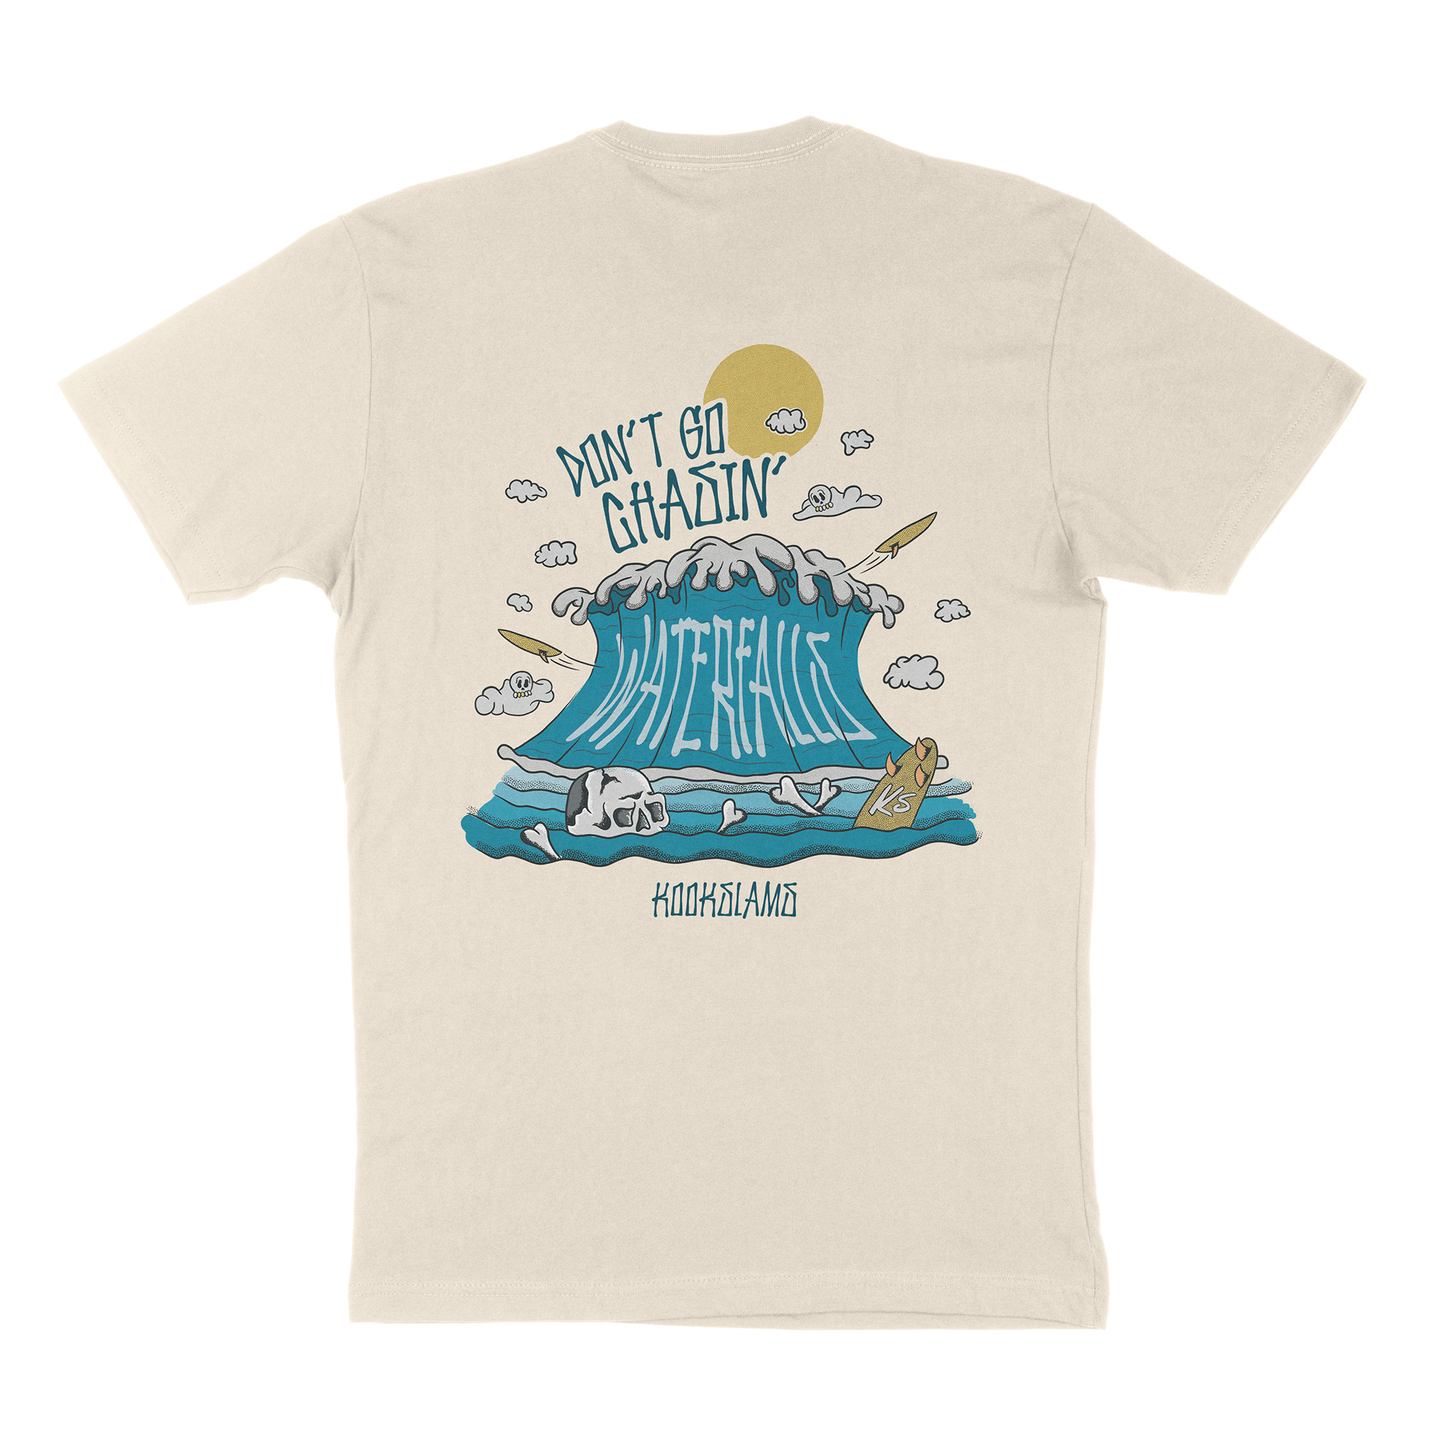 Waterfalls T Shirt